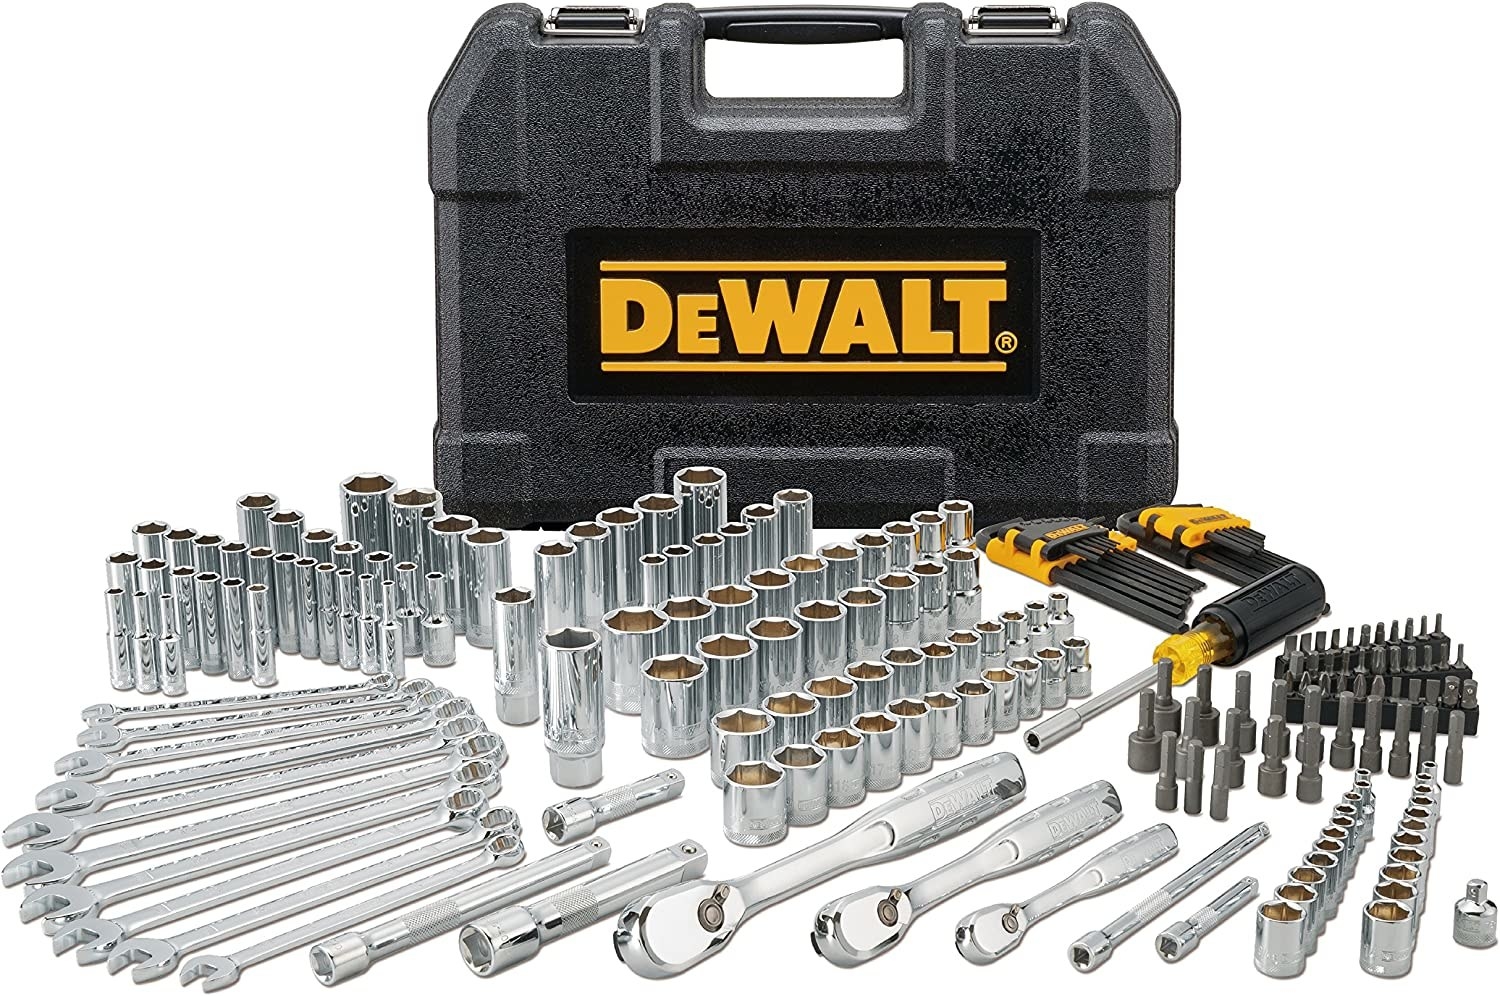 Black DeWalt tool box with complete set of chrome and black tools